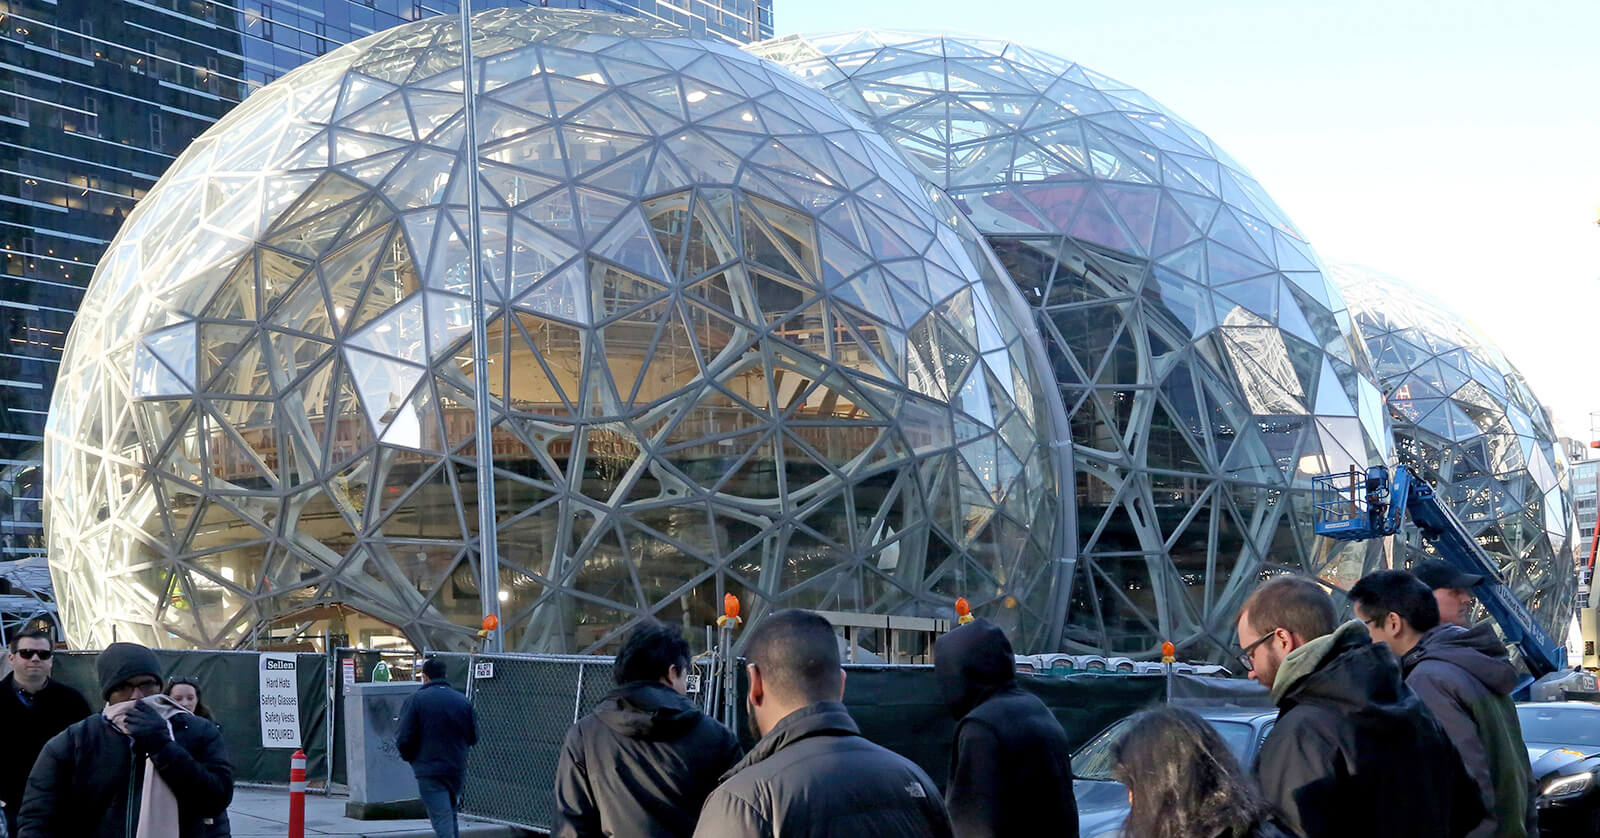 Amazon confirms a Seattle employee has coronavirus